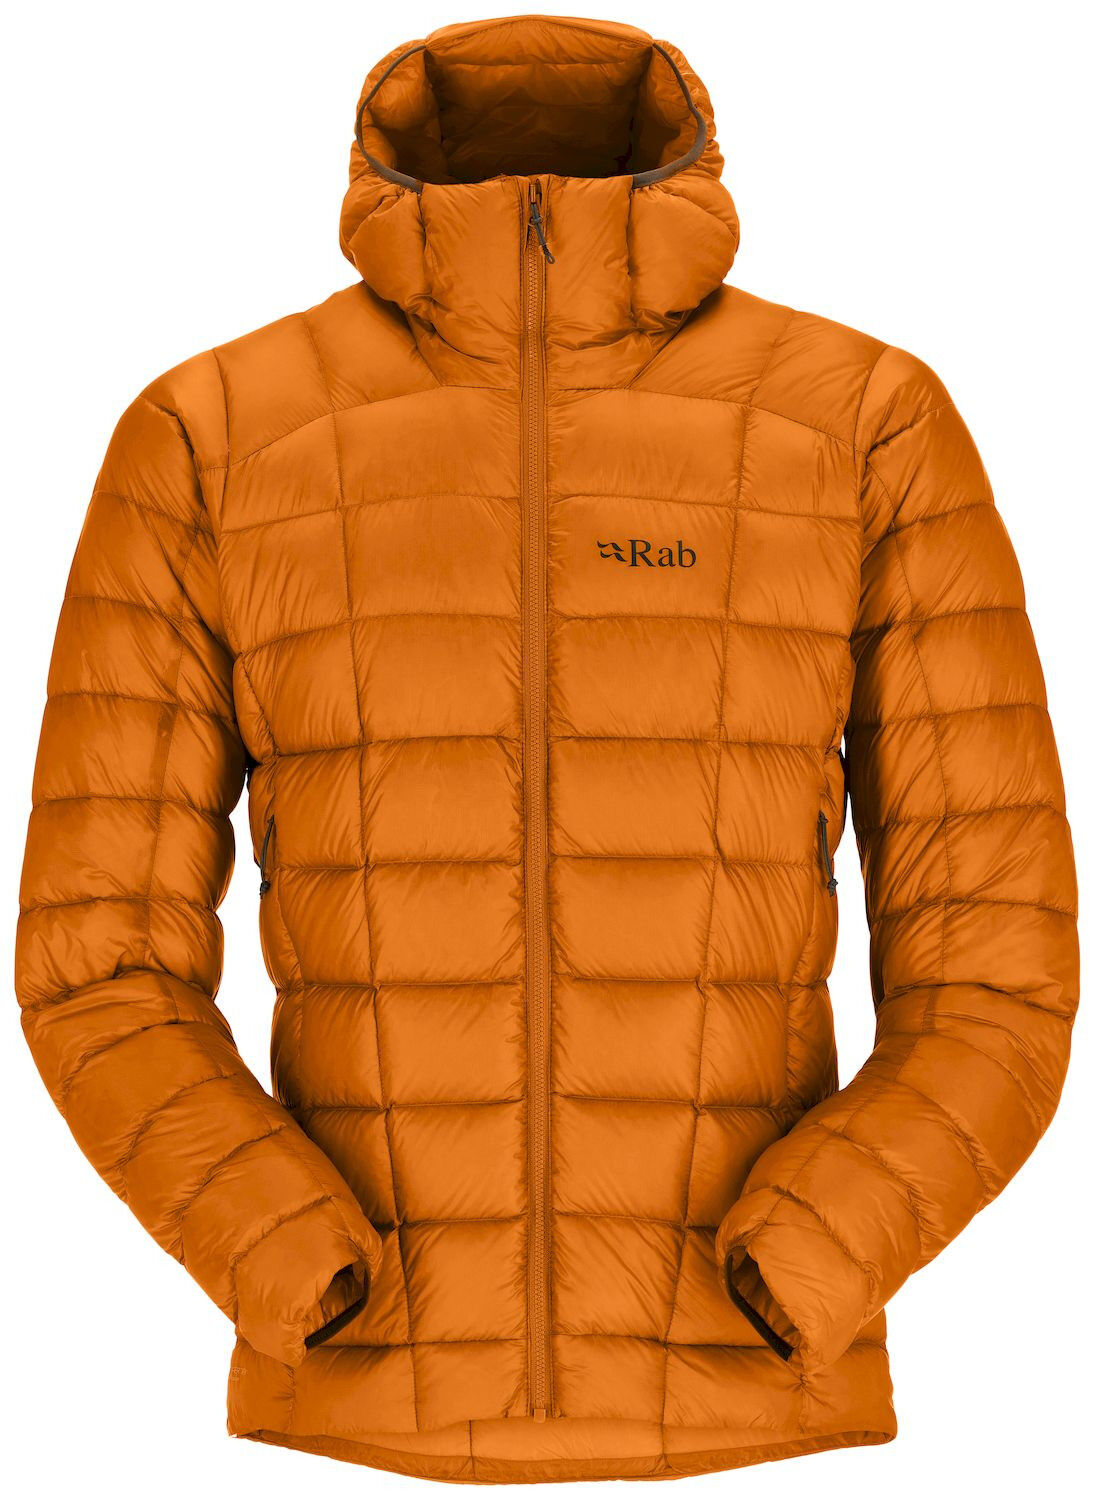 Rab Mythic Alpine Jacket - Daunenjacke - Herren